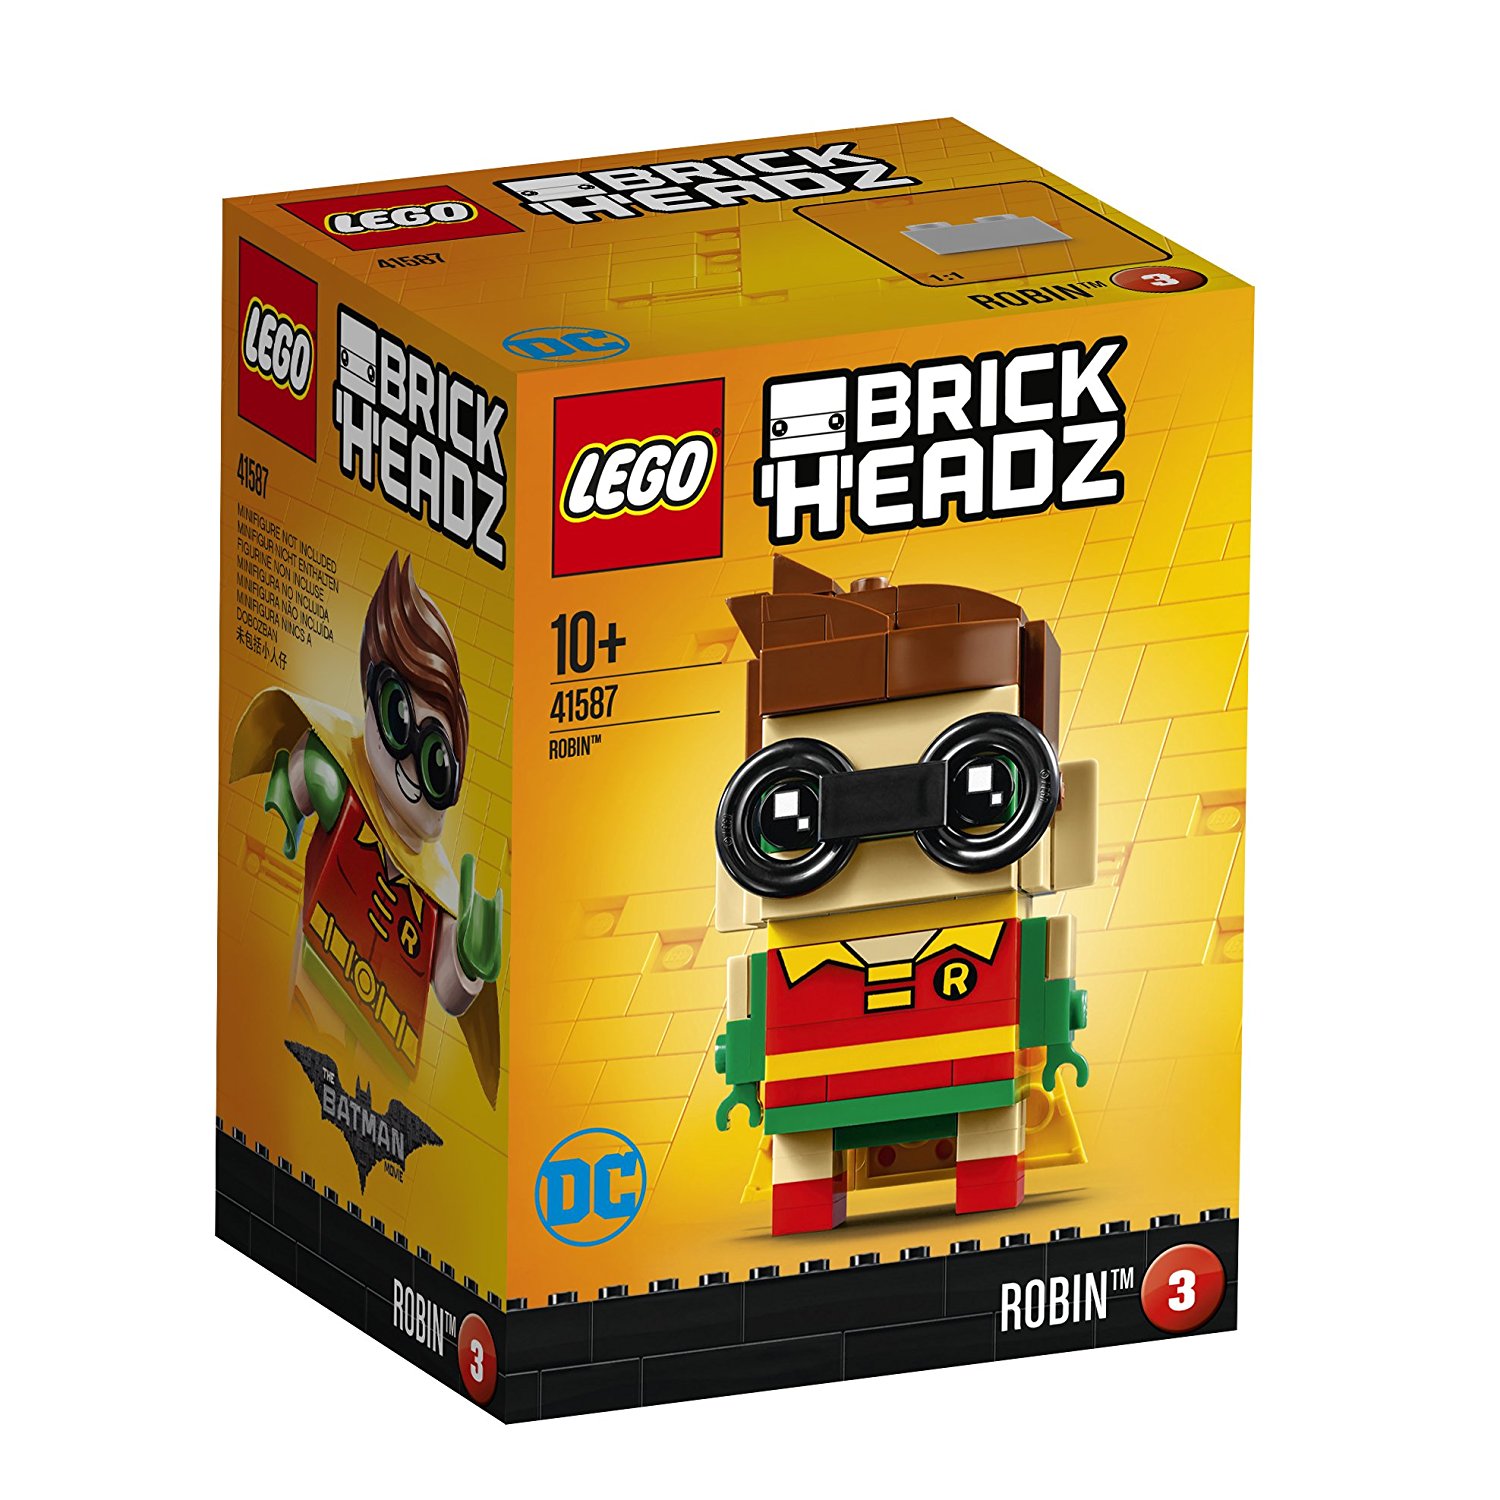 Brickheadz Robin Lego